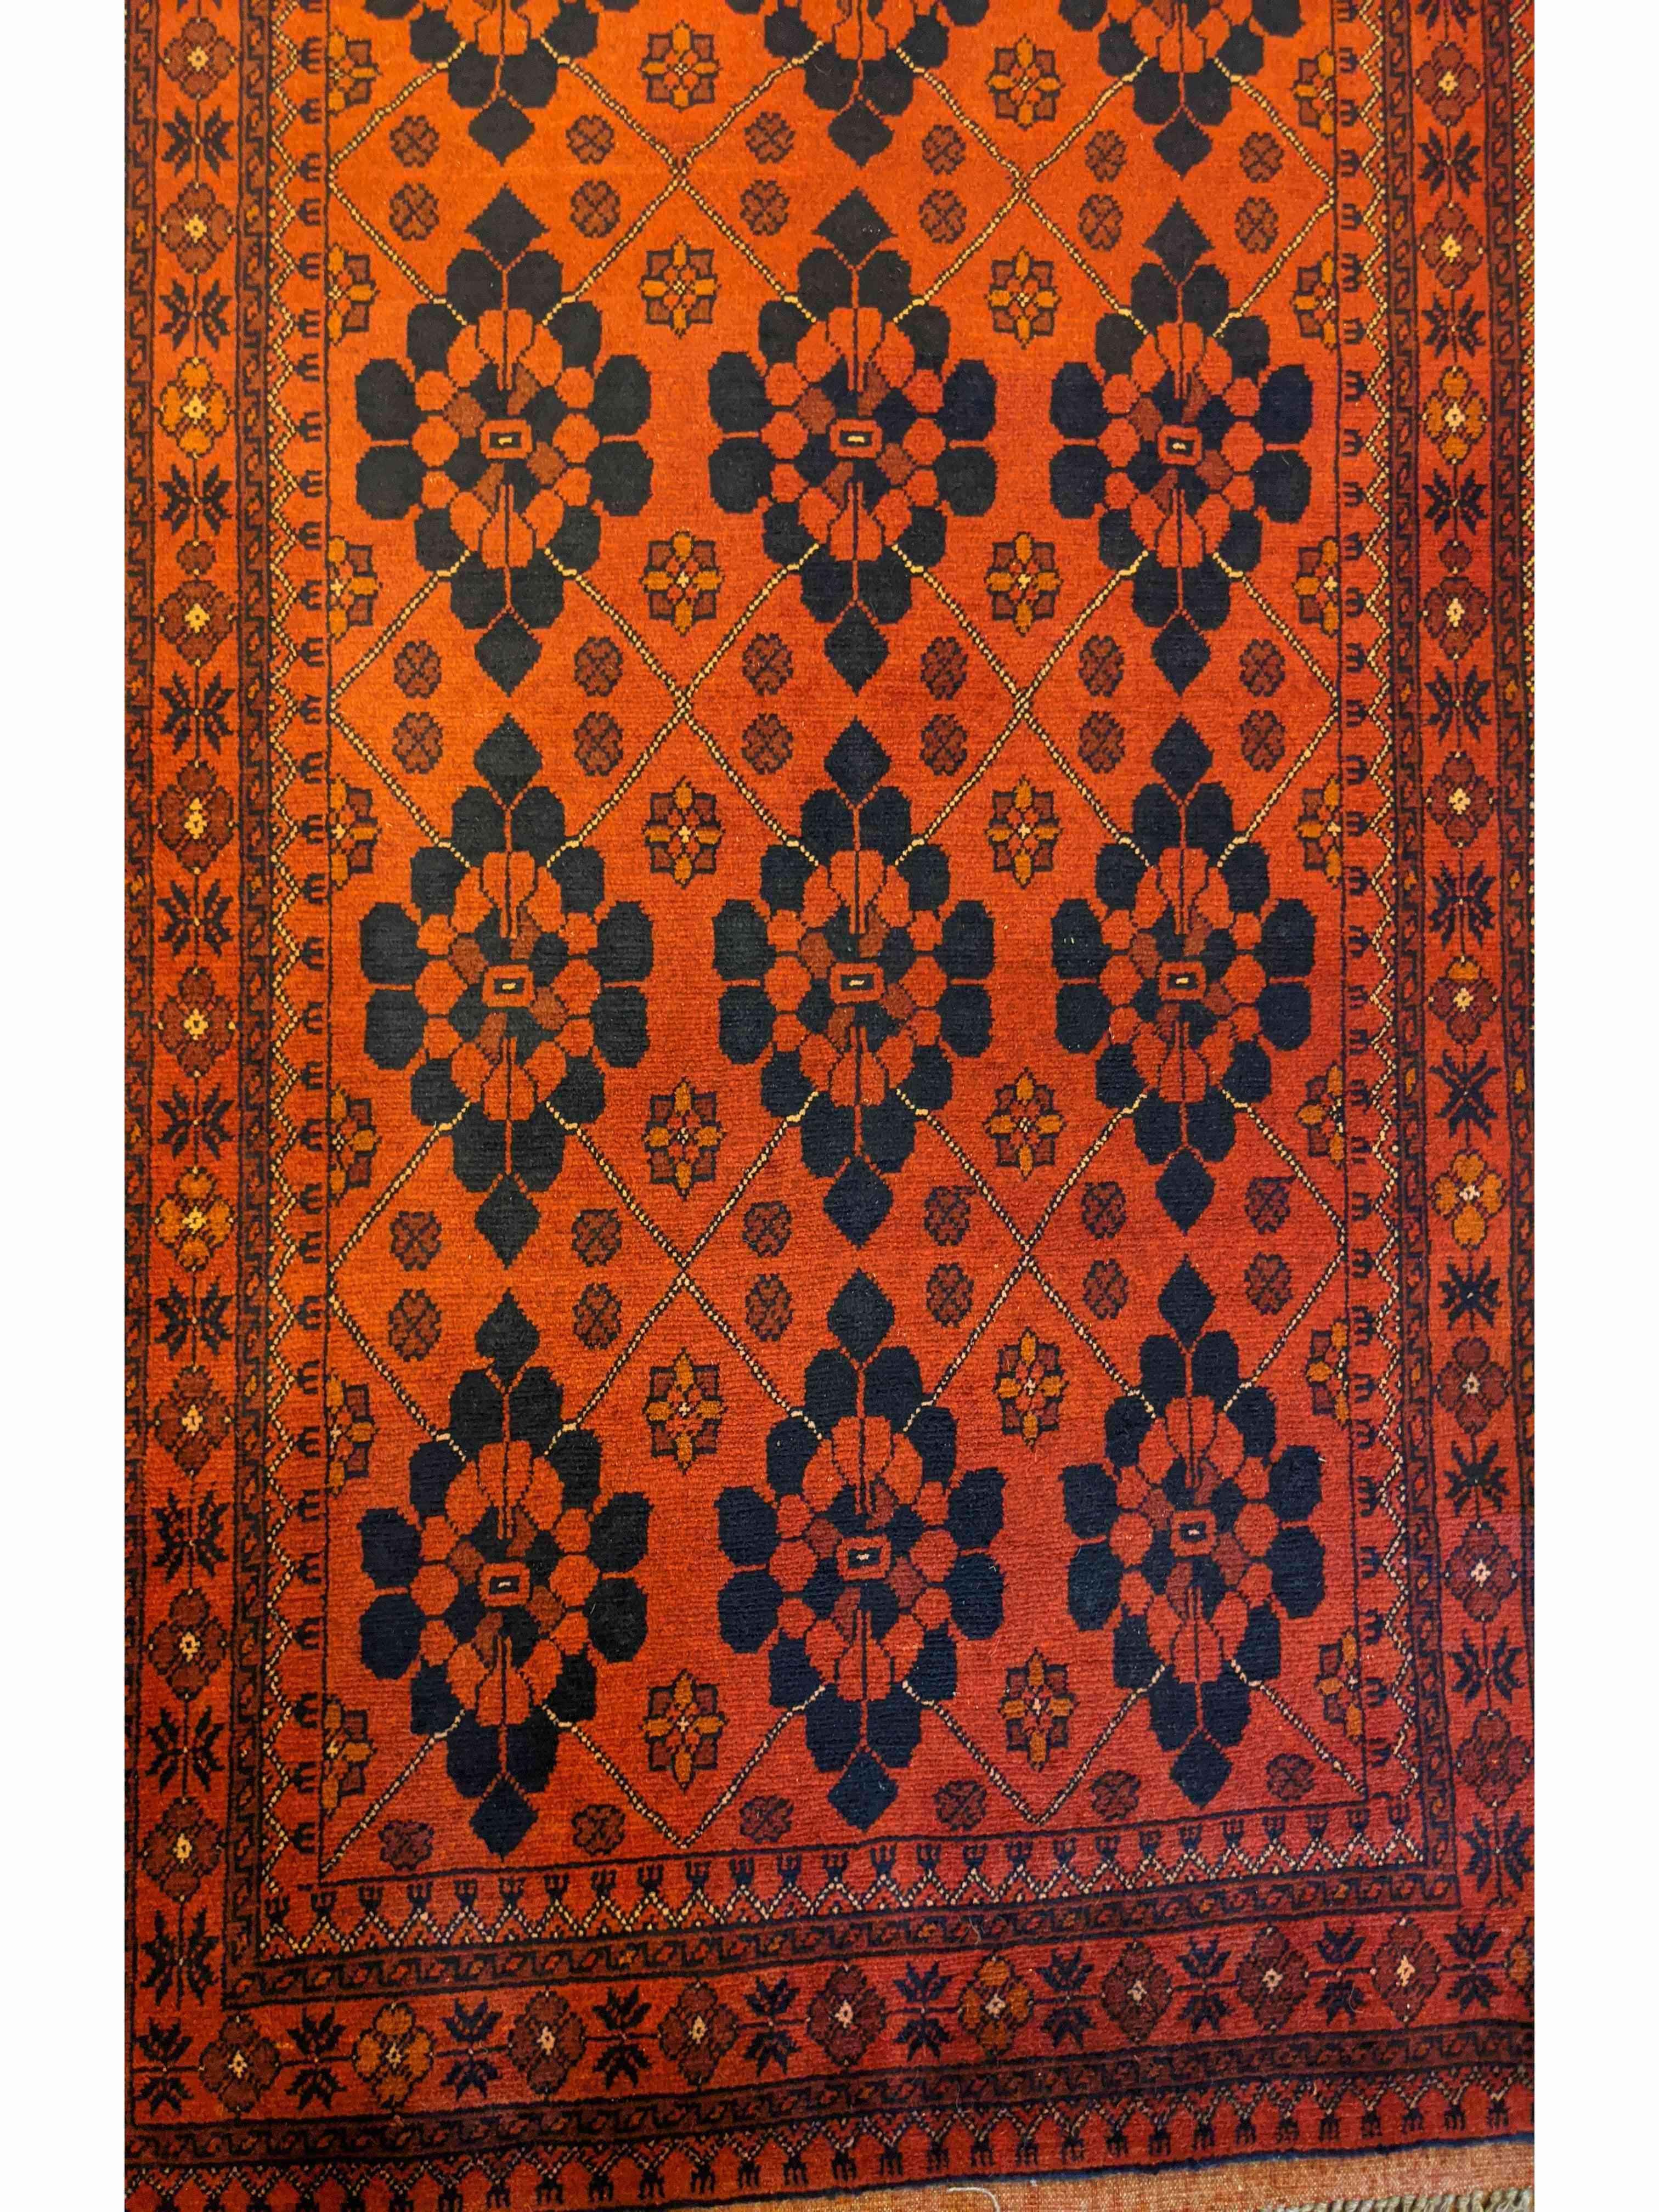 152 x 96 cm Afghan Khan Tribal Red Rug - Rugmaster